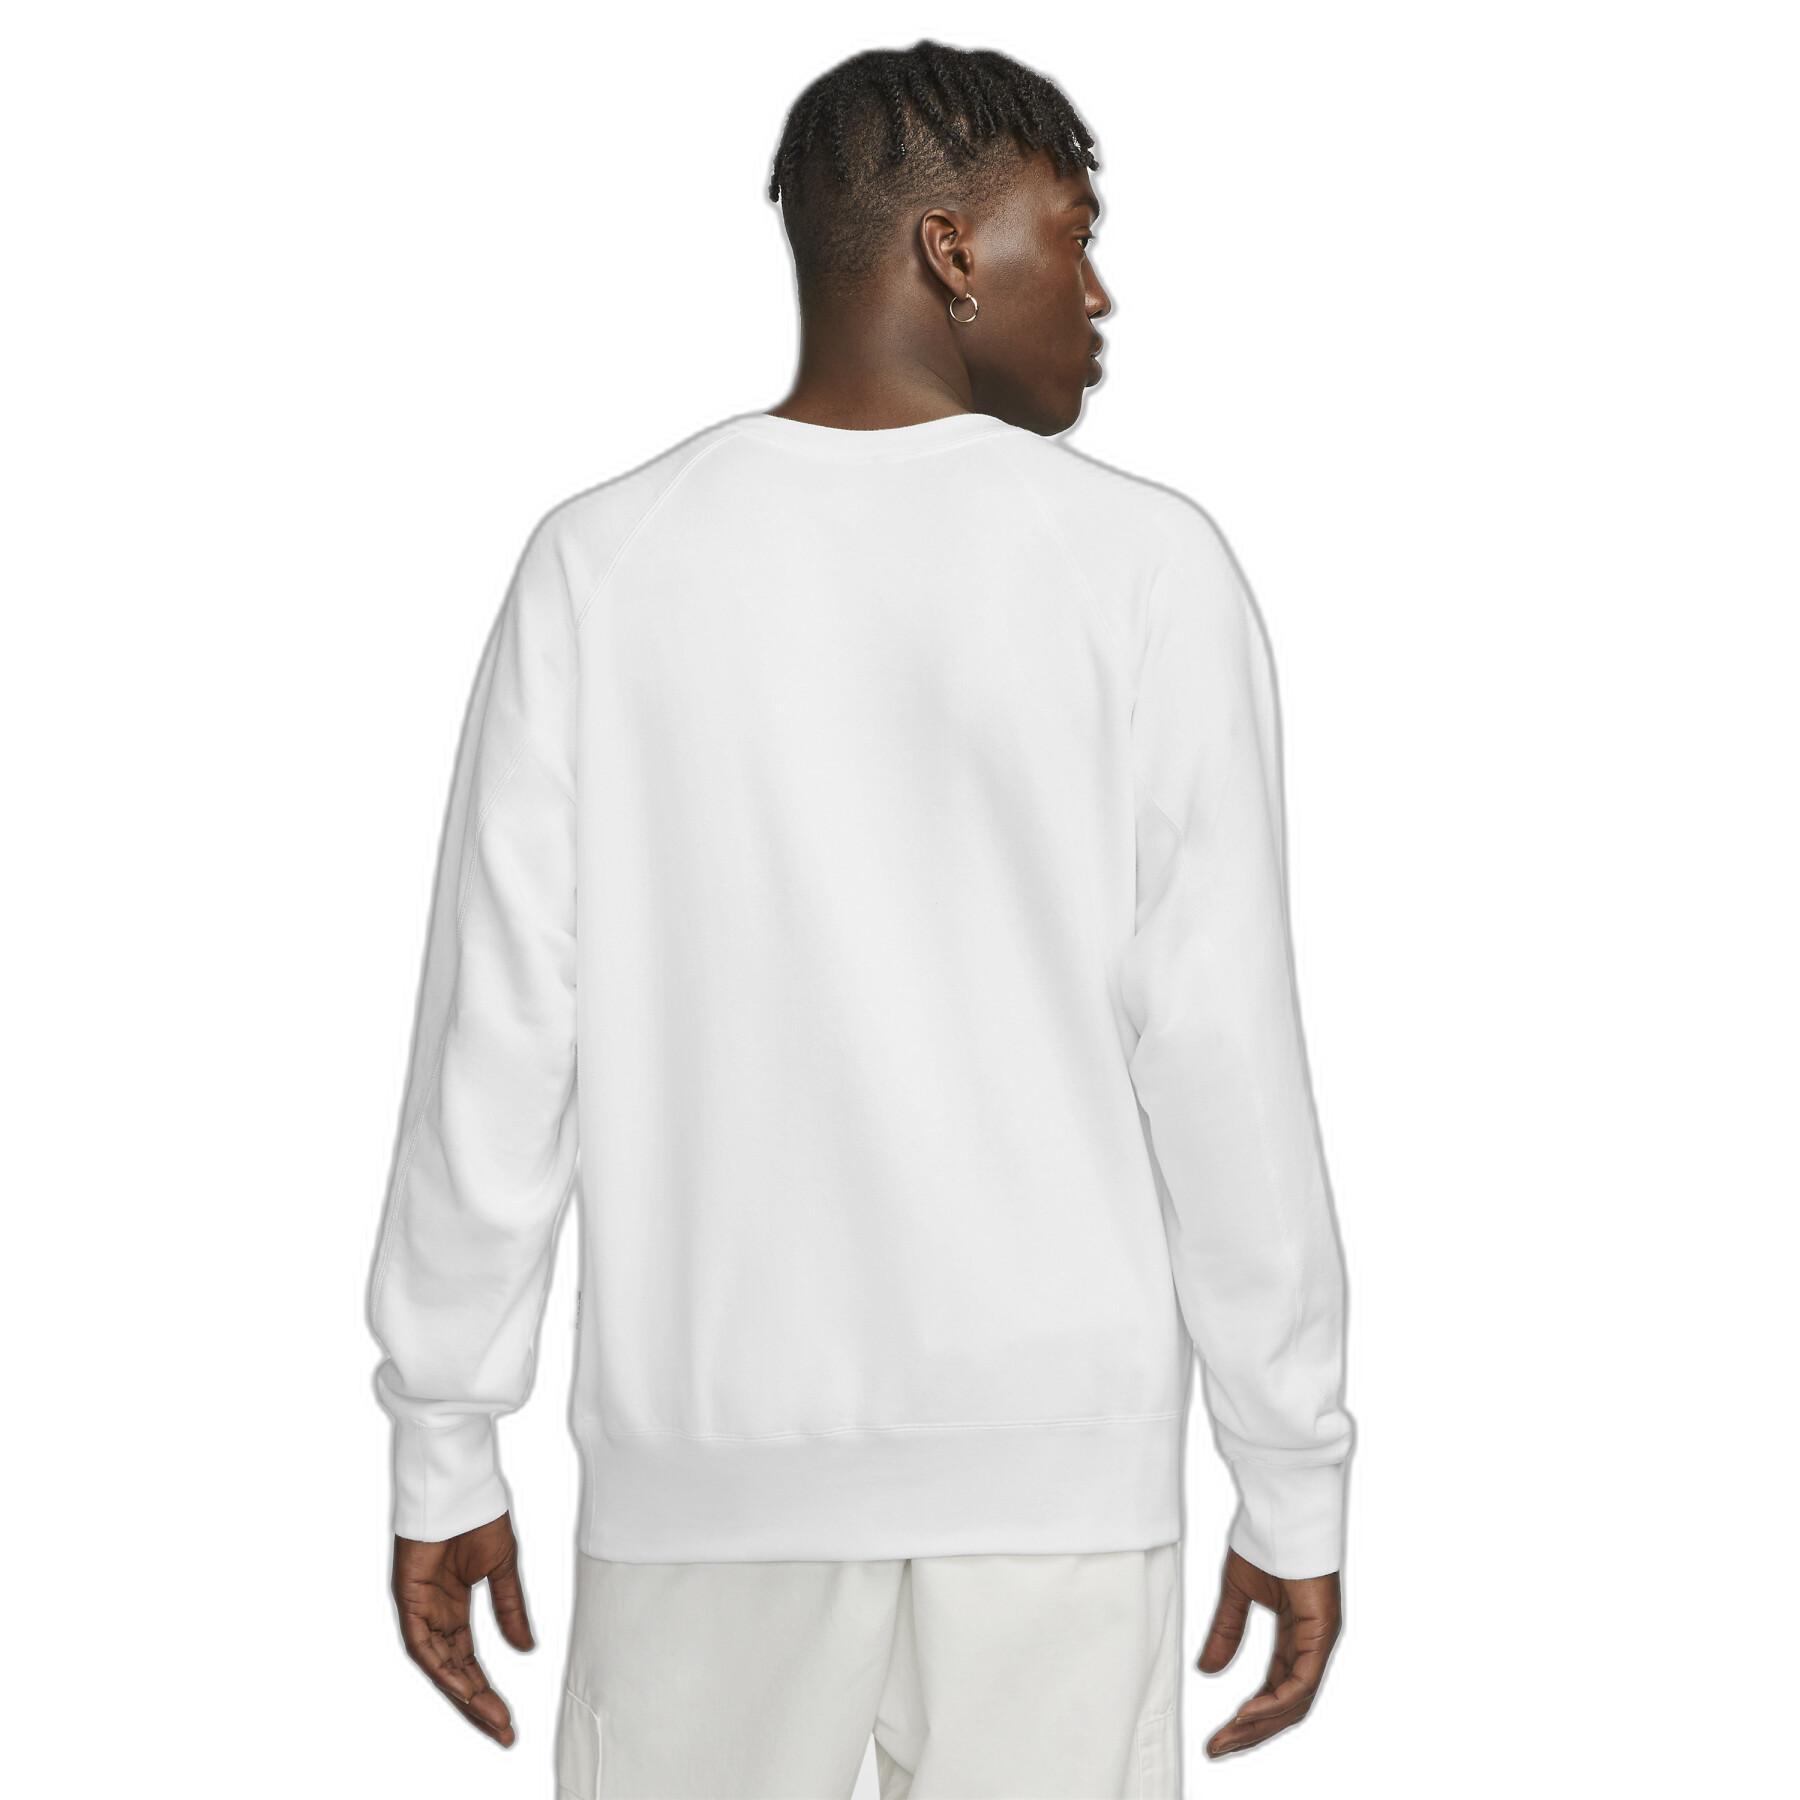 Sweatshirt round neck Nike Air FT